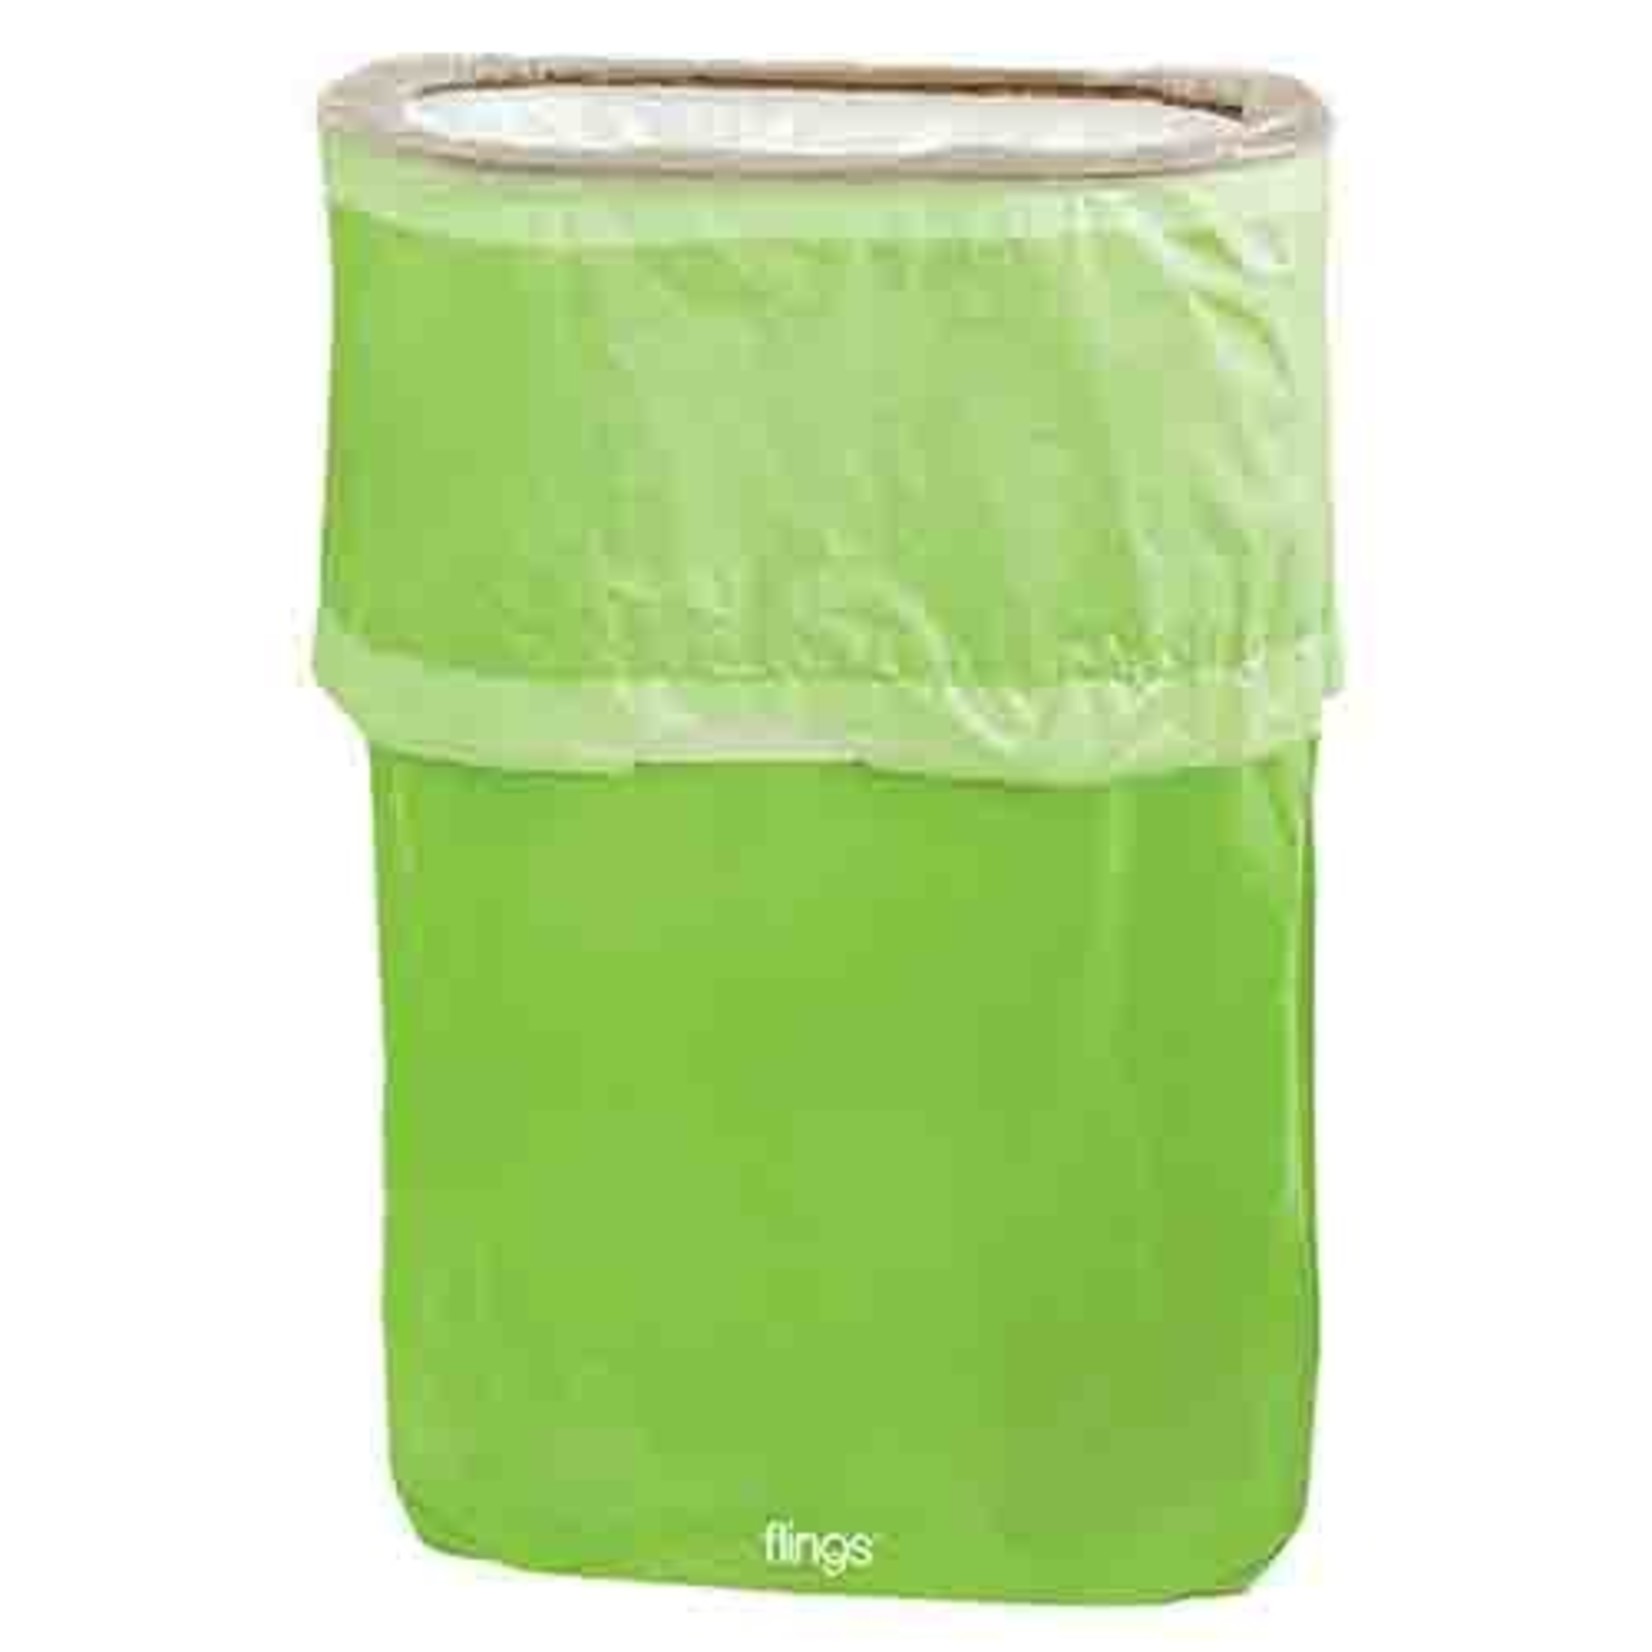 Amscan Kiwi Green 13 Gallon Trash Fling Bin - 1ct.